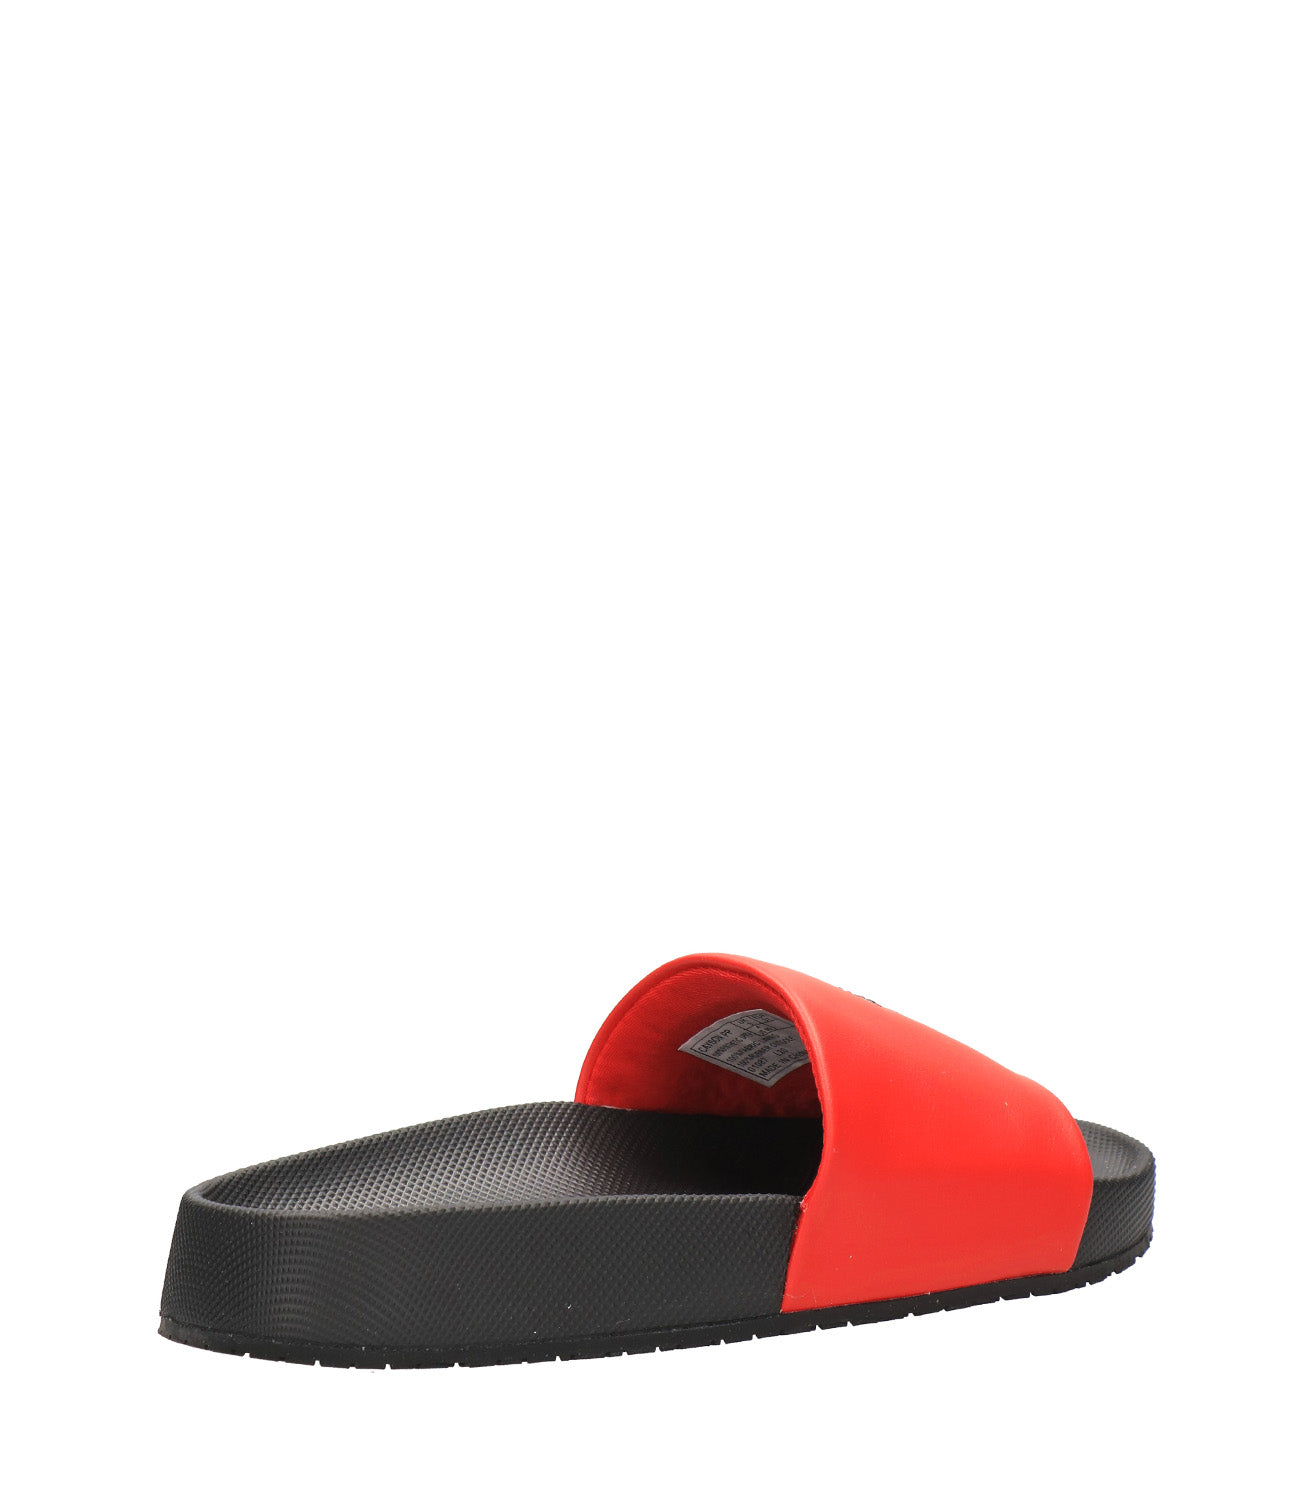 Black and Red Slipper